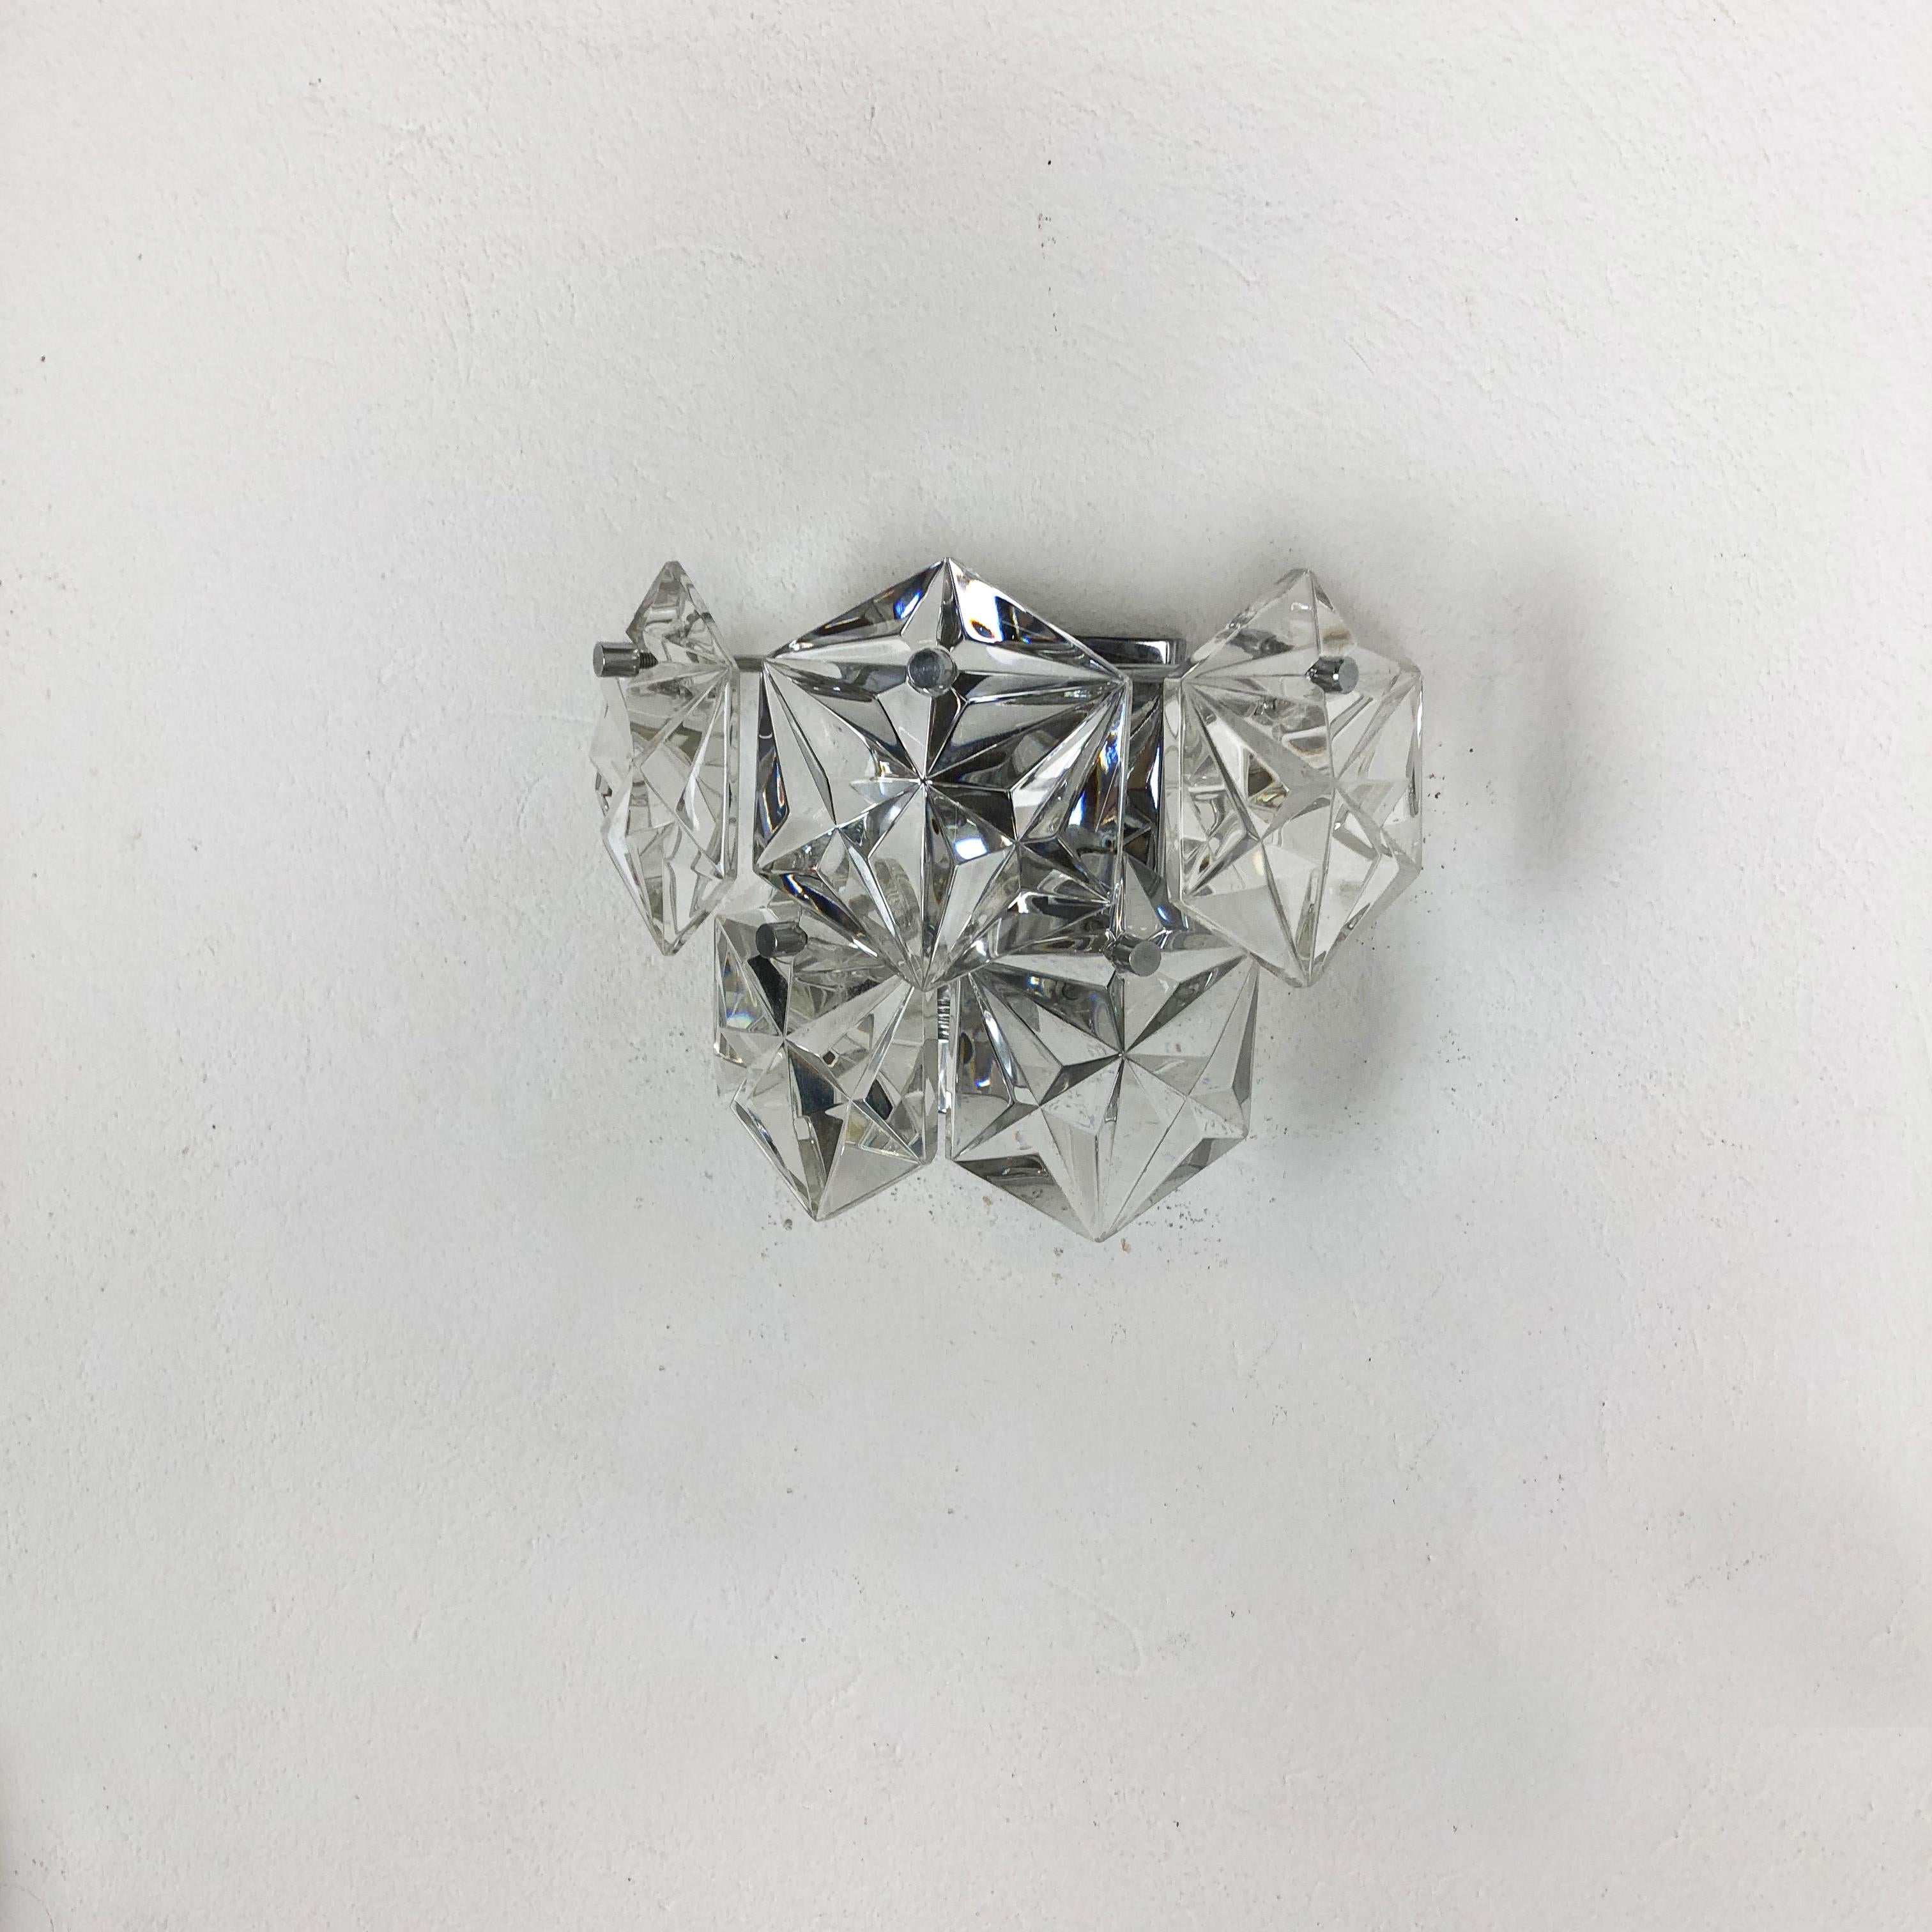 Set of 2 Prismatic Crystal Glass Wall Light Sconces by Kinkeldey, Germany No. 1 5